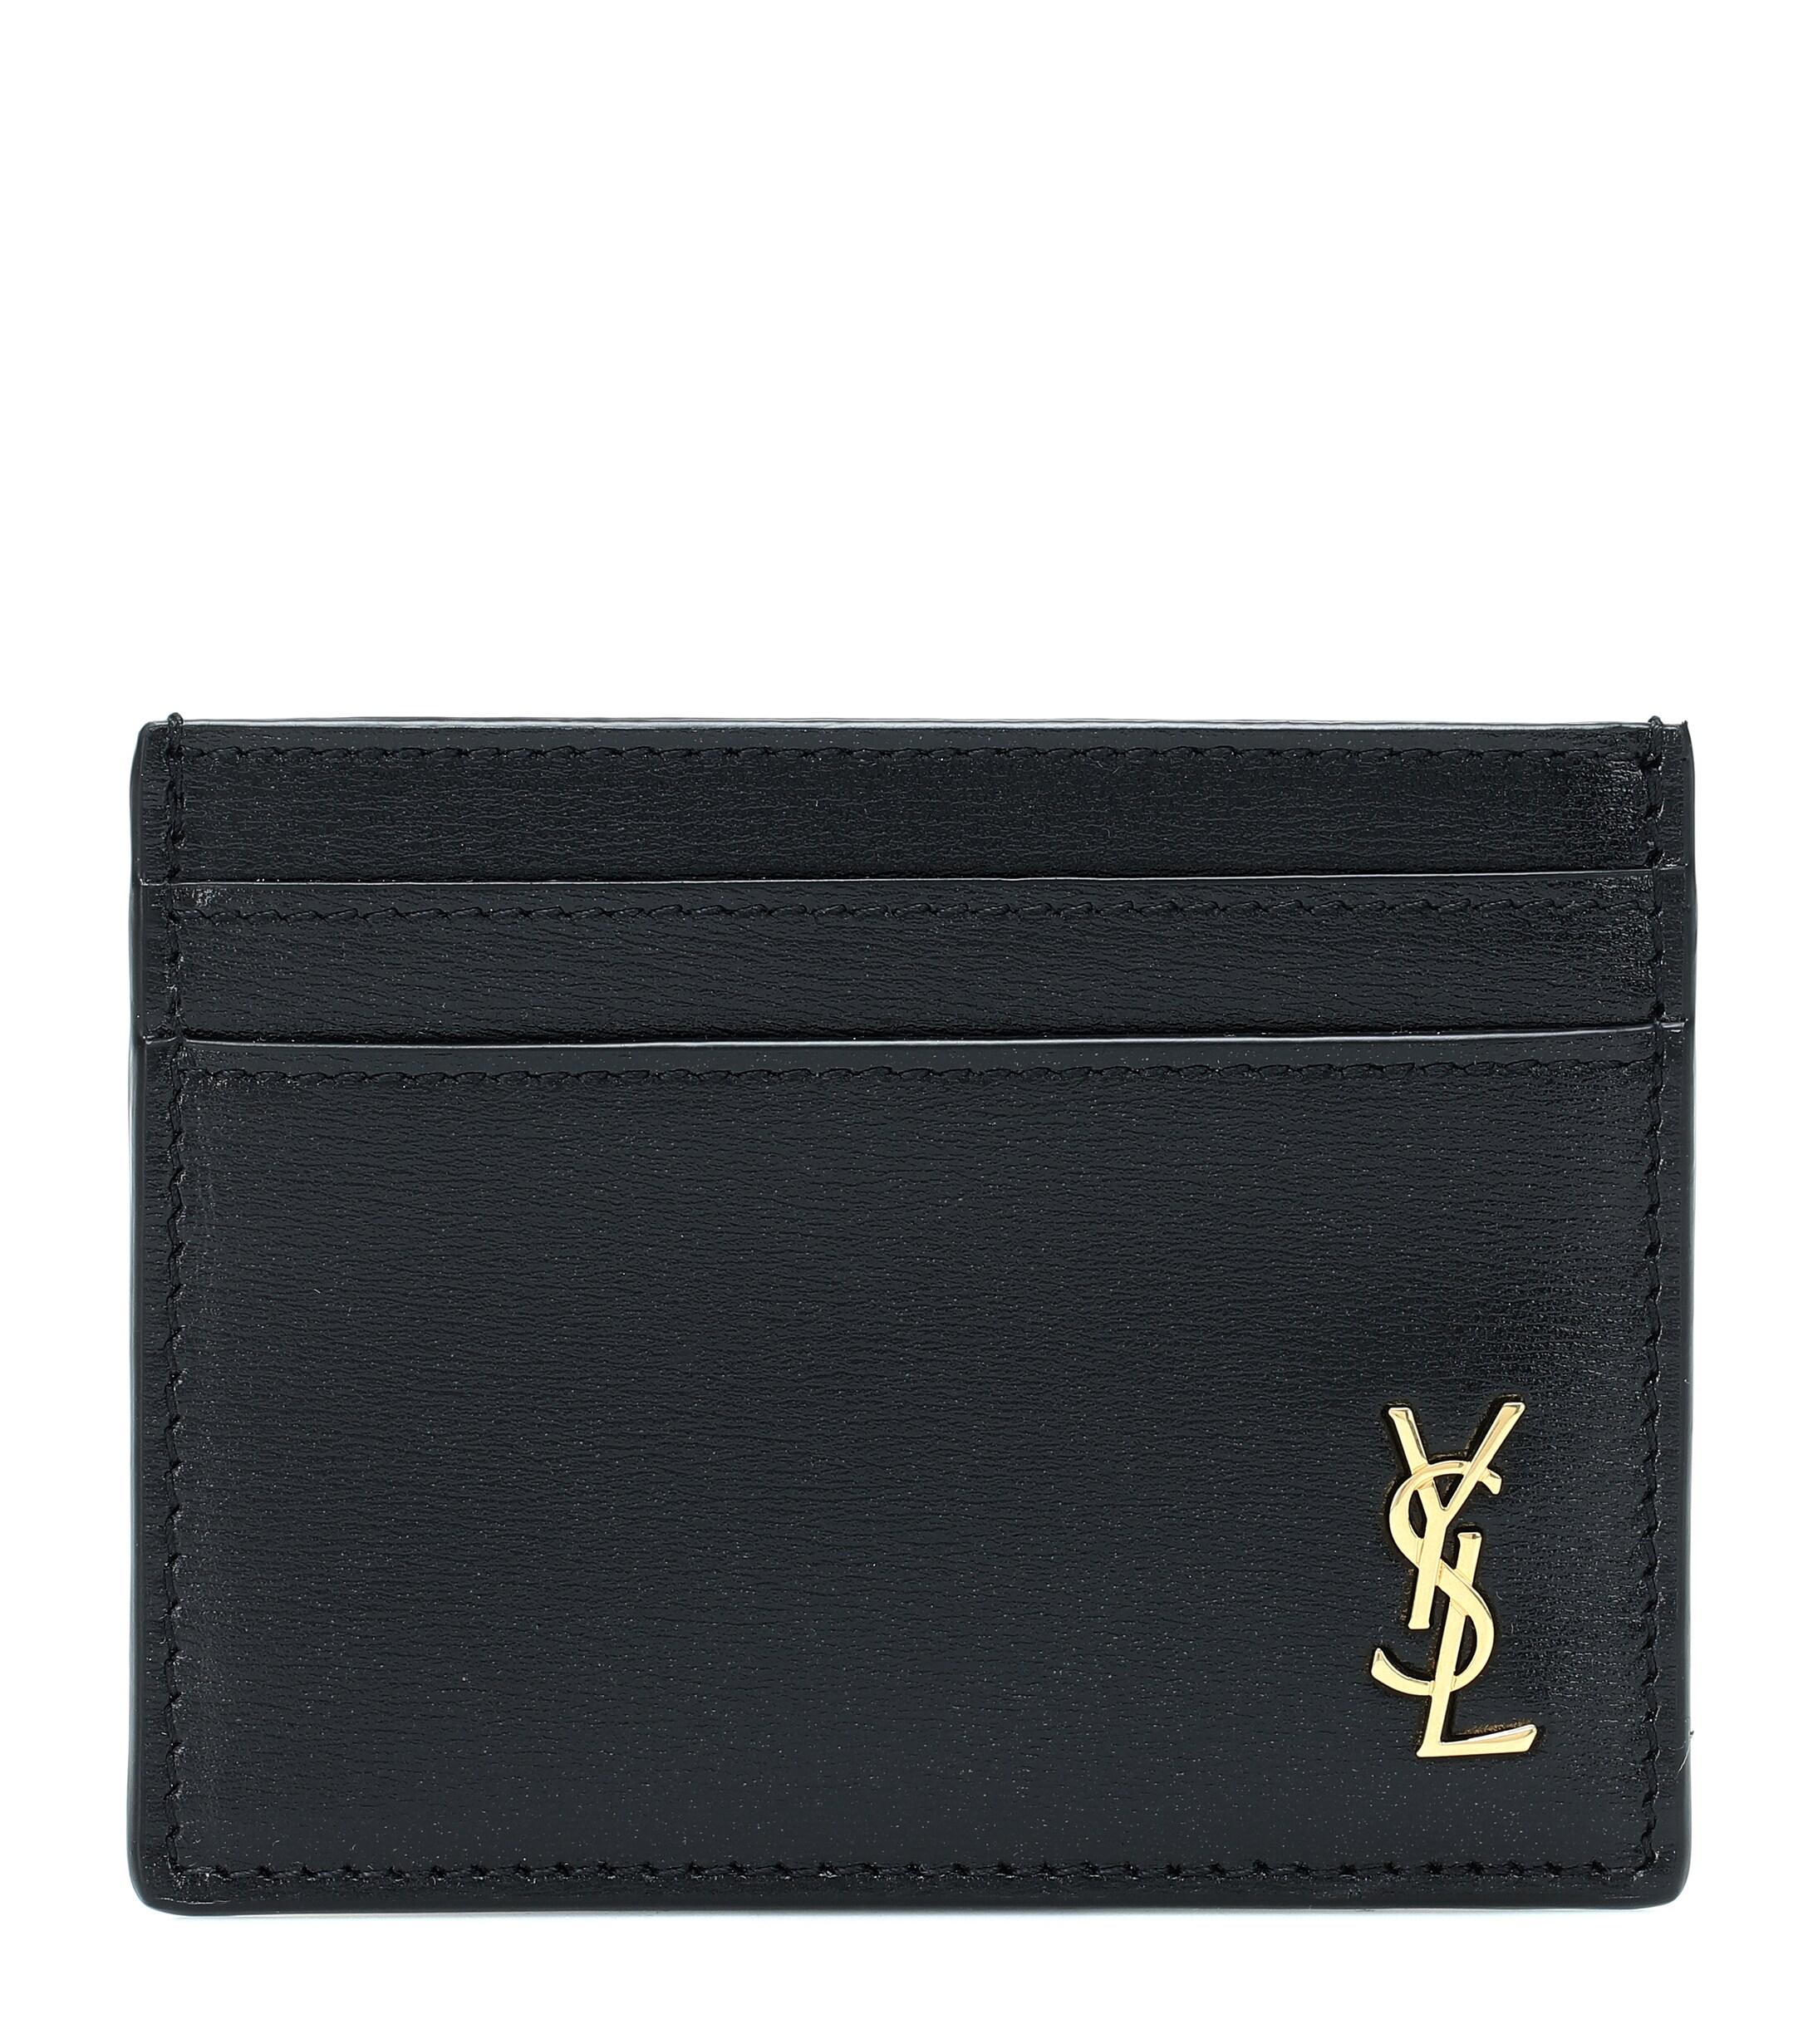 Saint Laurent Leather Card Holder in Black - Lyst